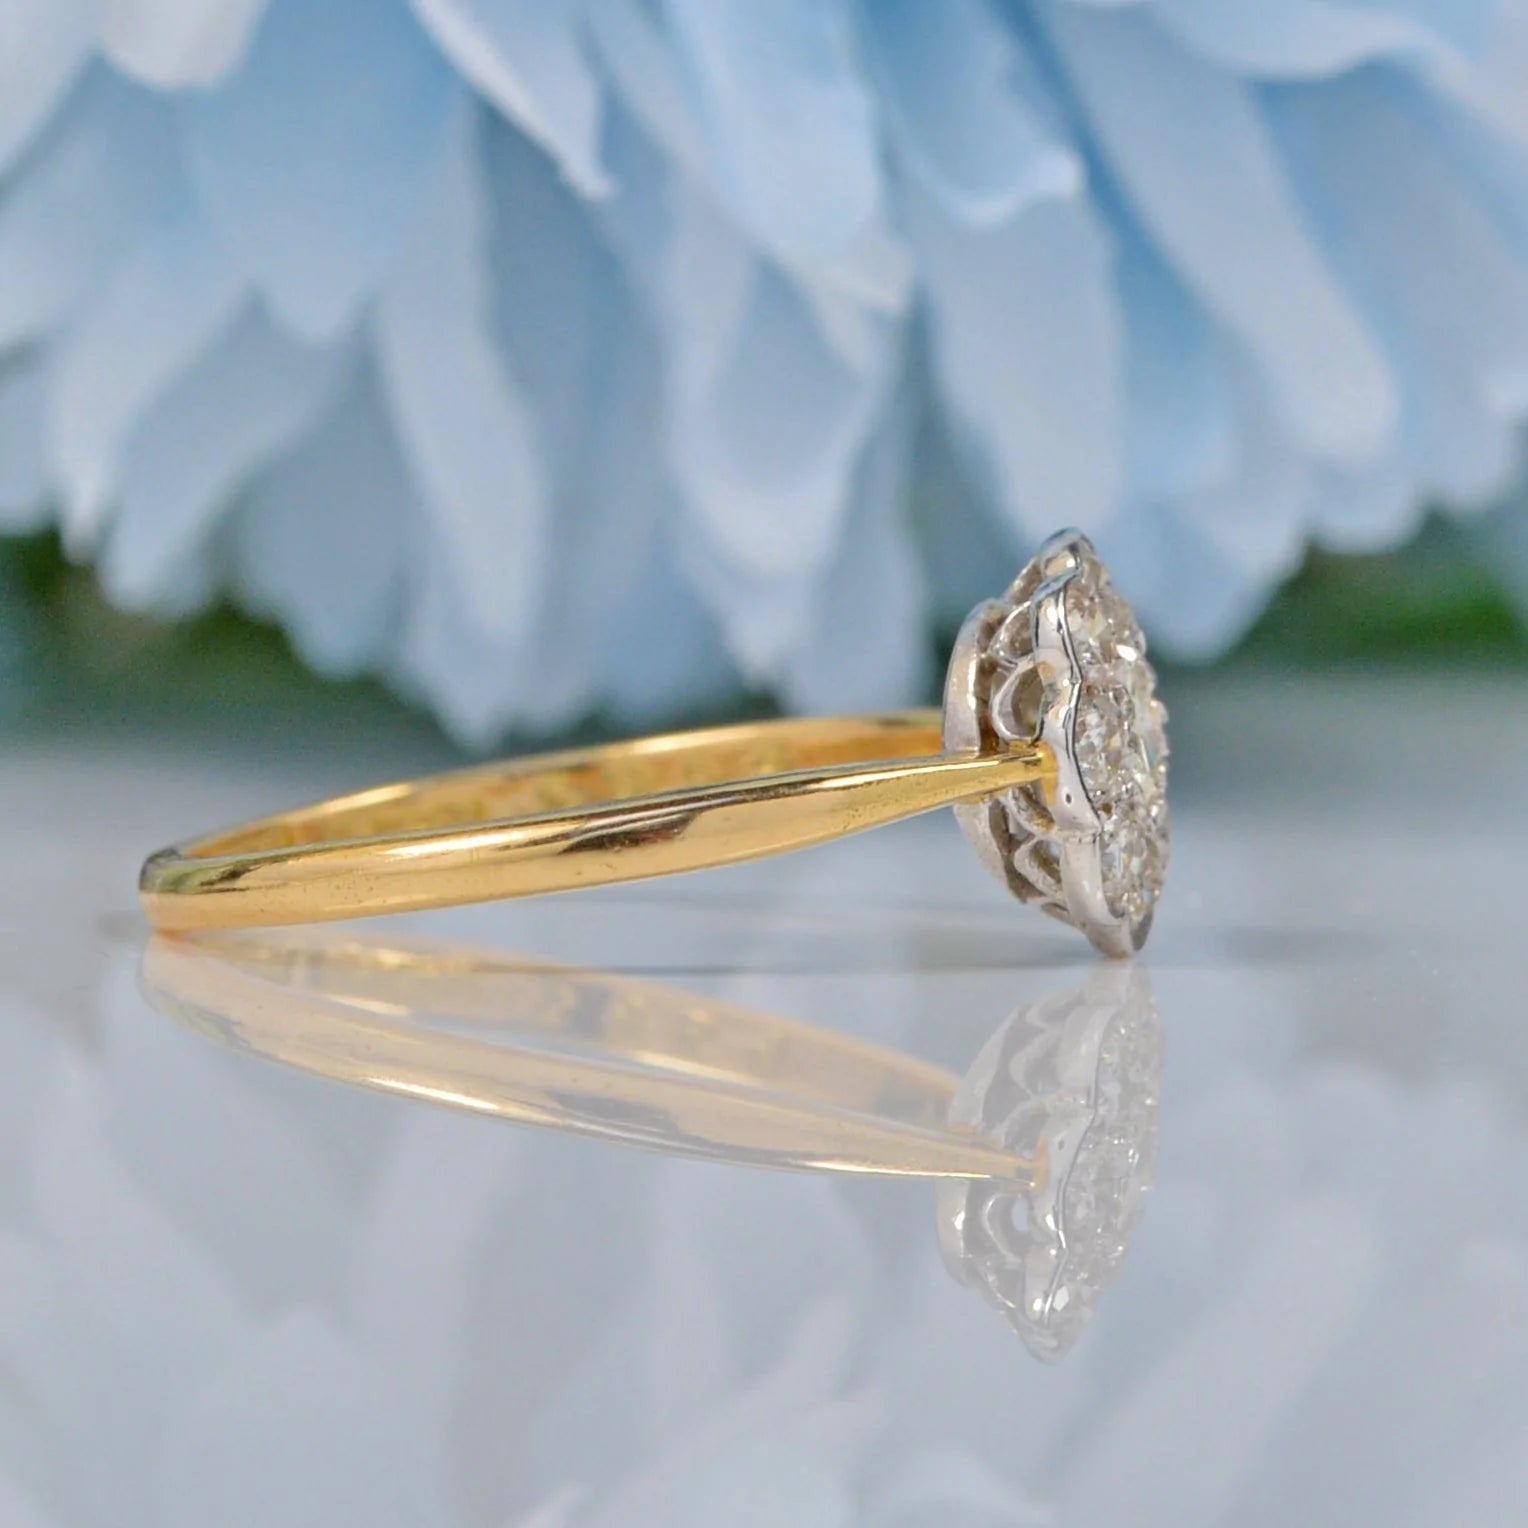 Ellibelle Jewellery ART DECO 18CT GOLD DIAMOND DAISY HALO CLUSTER RING